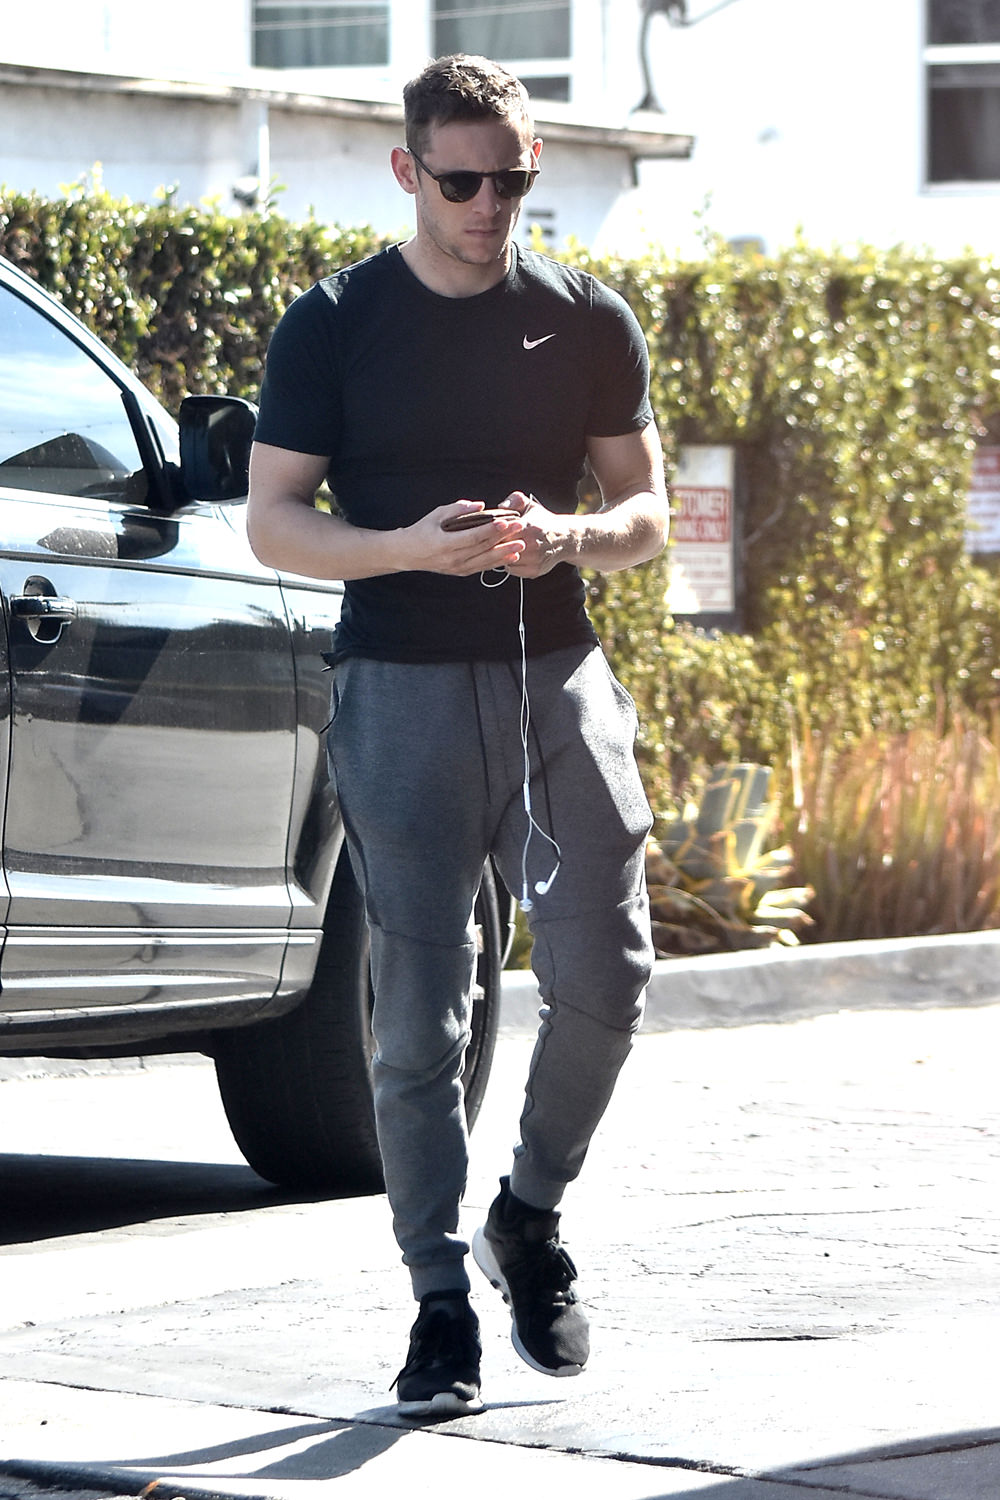 Jamie Walking Out Of His Car (Source: Tom + Lorenzo)